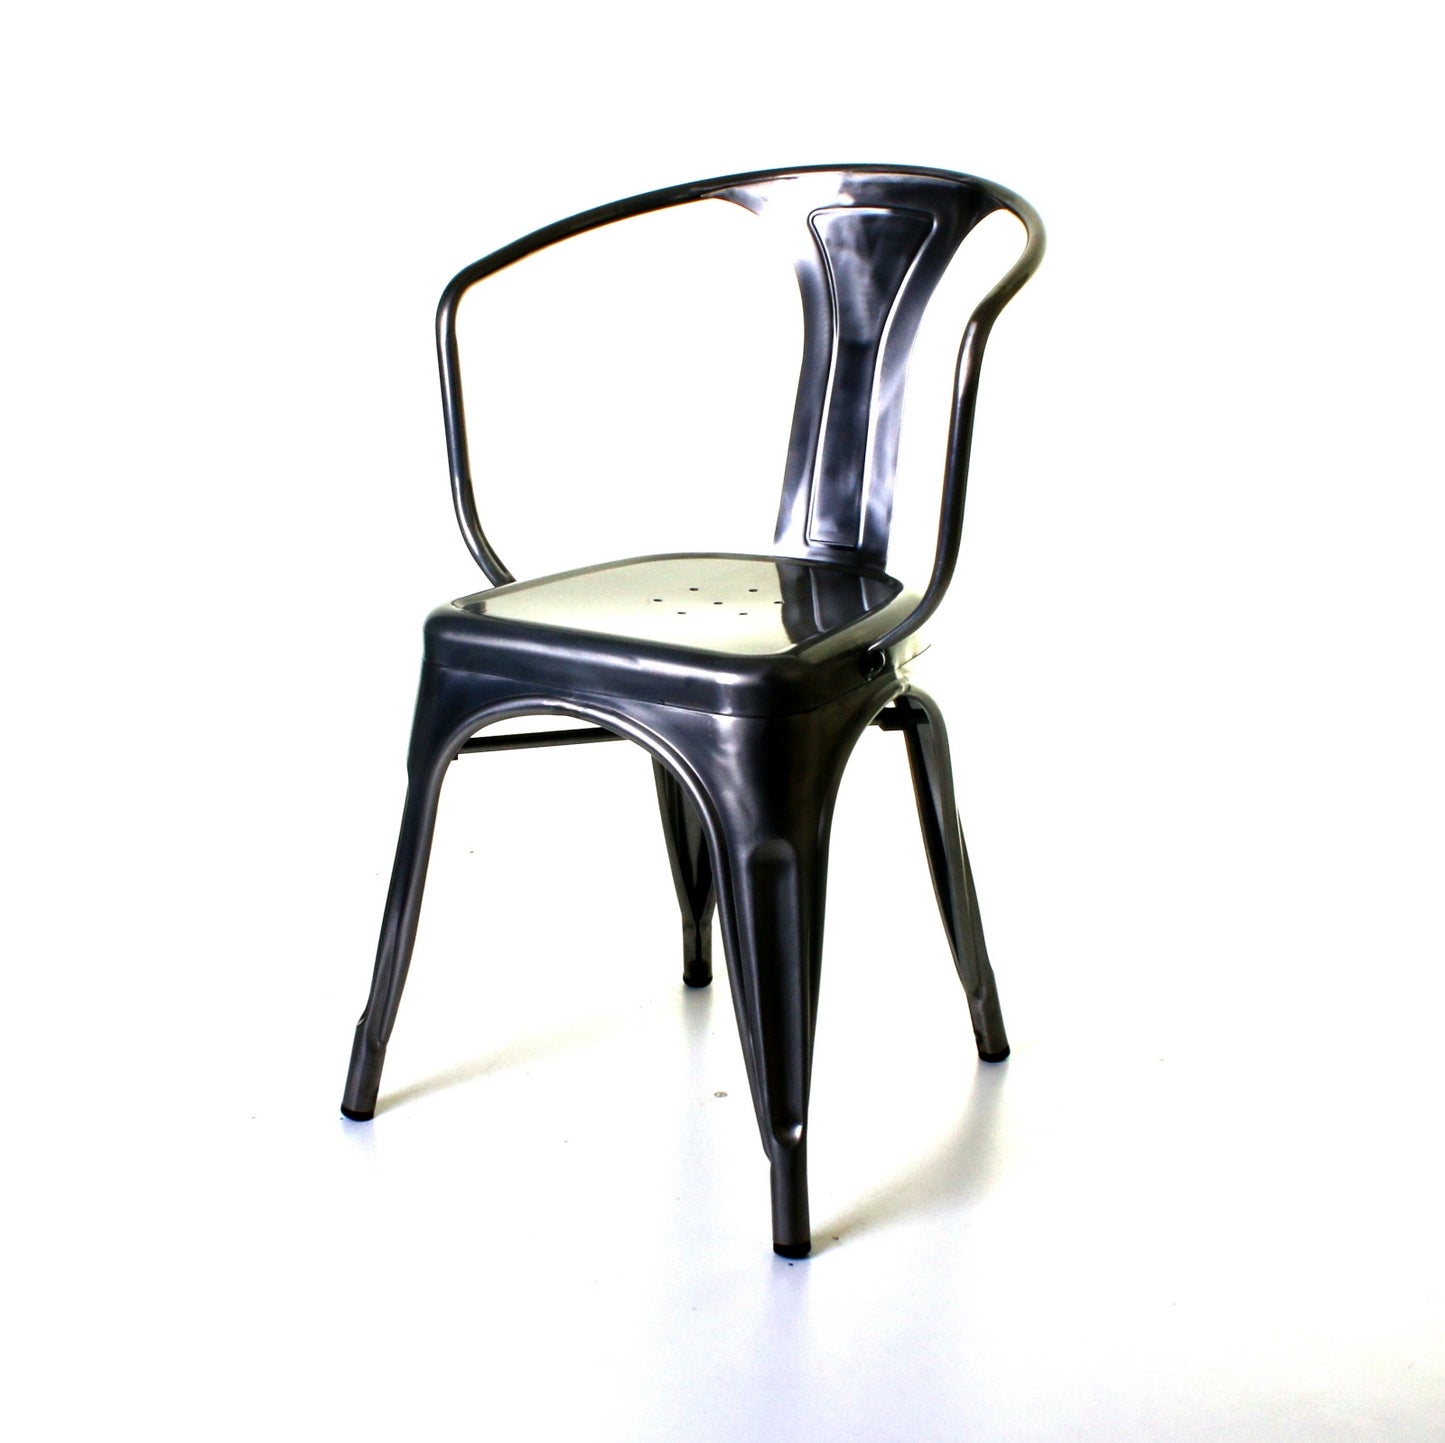 5PC Prato Table, 2 Forli Chairs & 2 Castel Stools Set - Steel